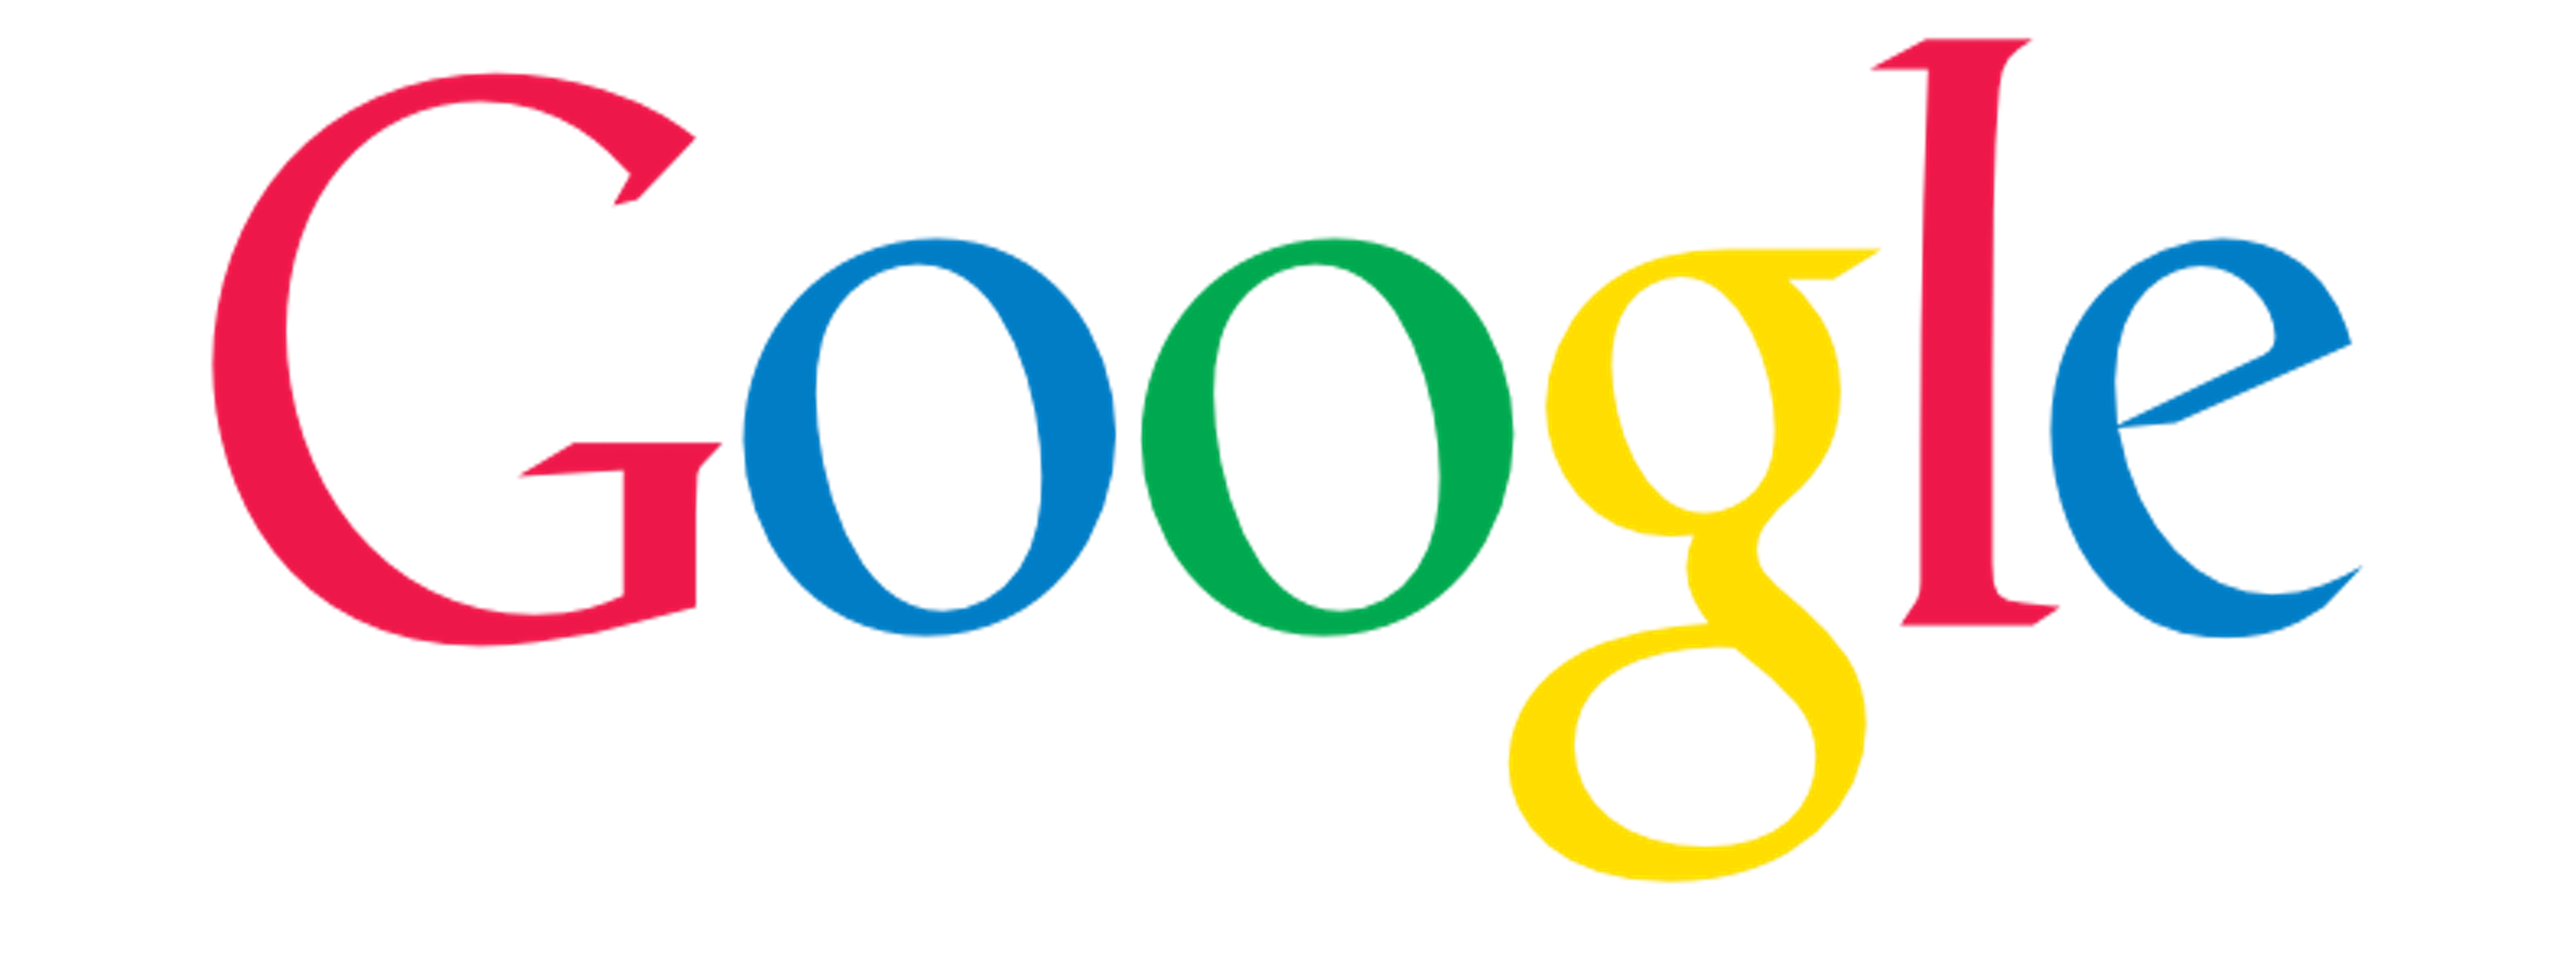 Again google. Логотип гугл. Google логотип PNG. Google анимация логотипа. Гугл без фона.